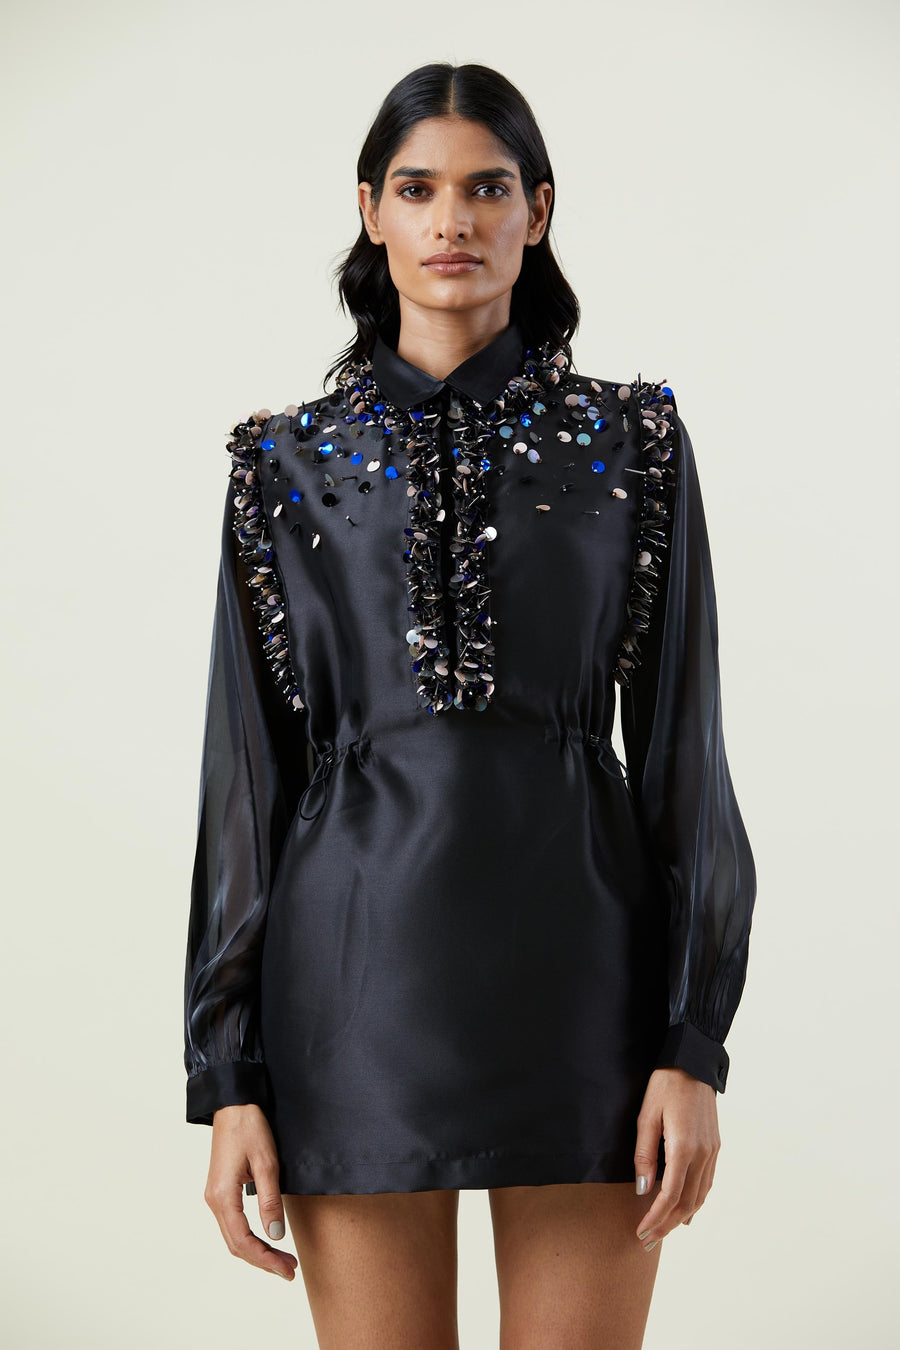 'STARLIGHT' EMBELLISHED DRESS - Kanika Goyal Label